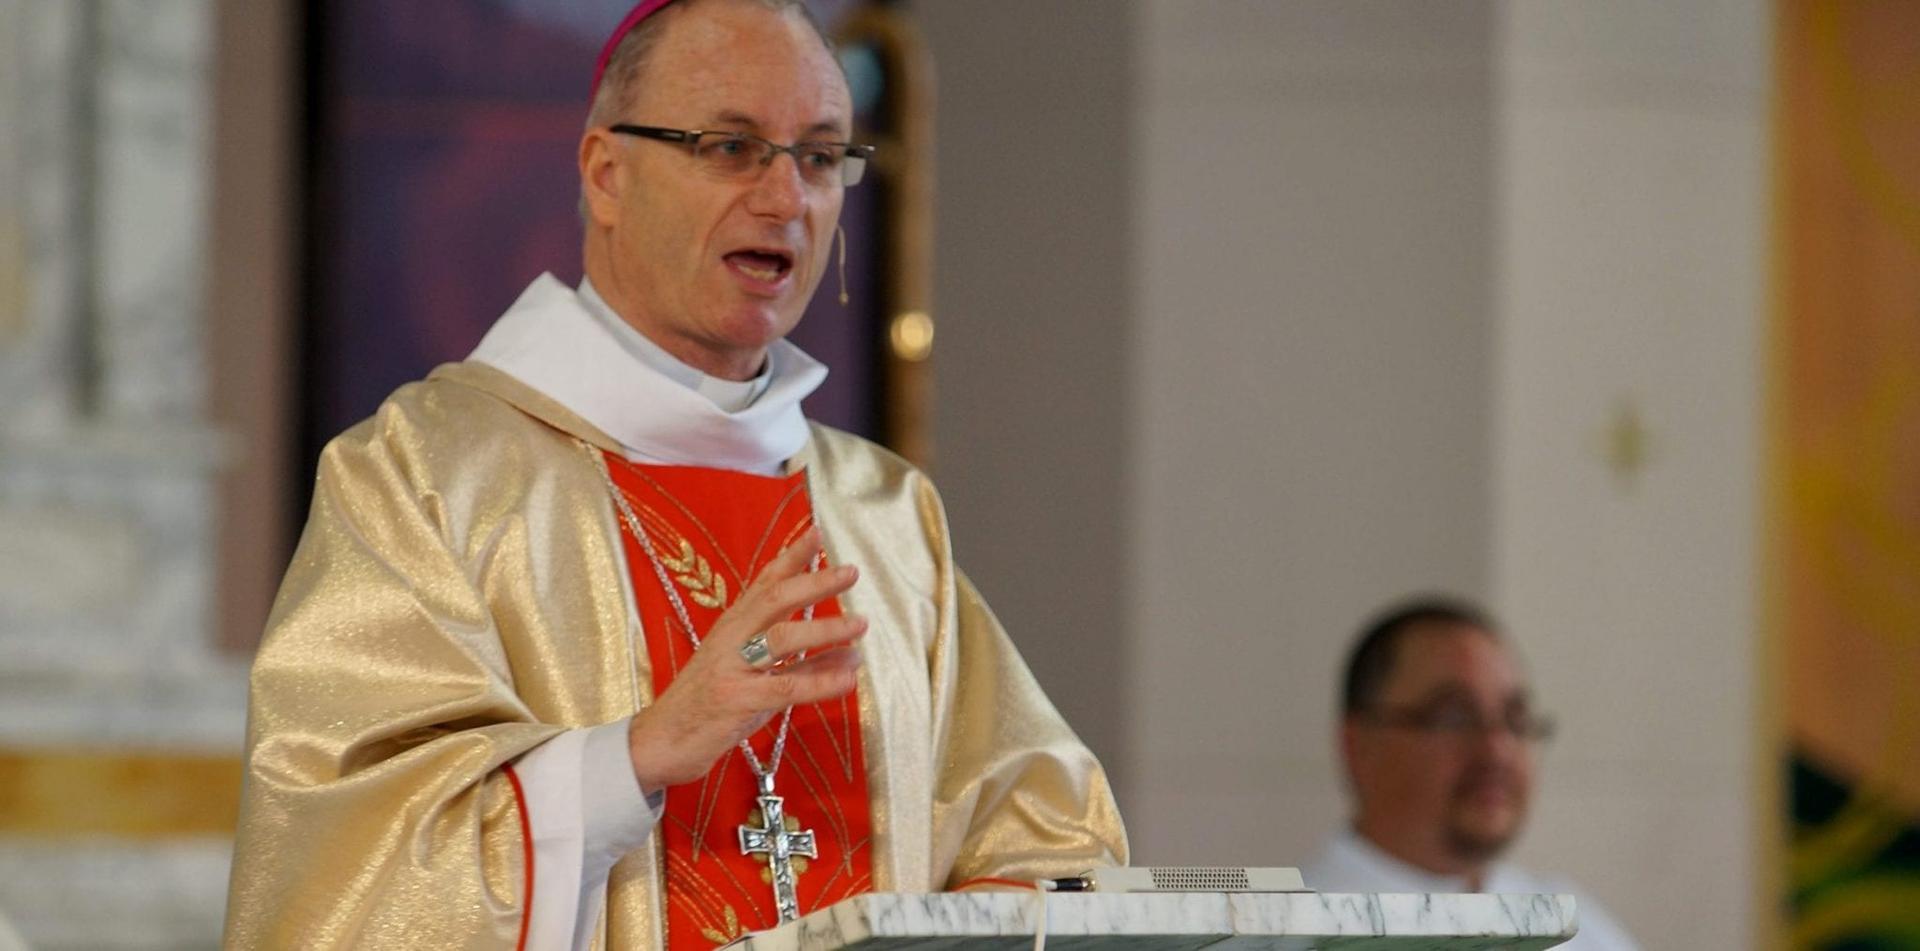 NZ bishop resigns over ‘unacceptable’ sexual relationship